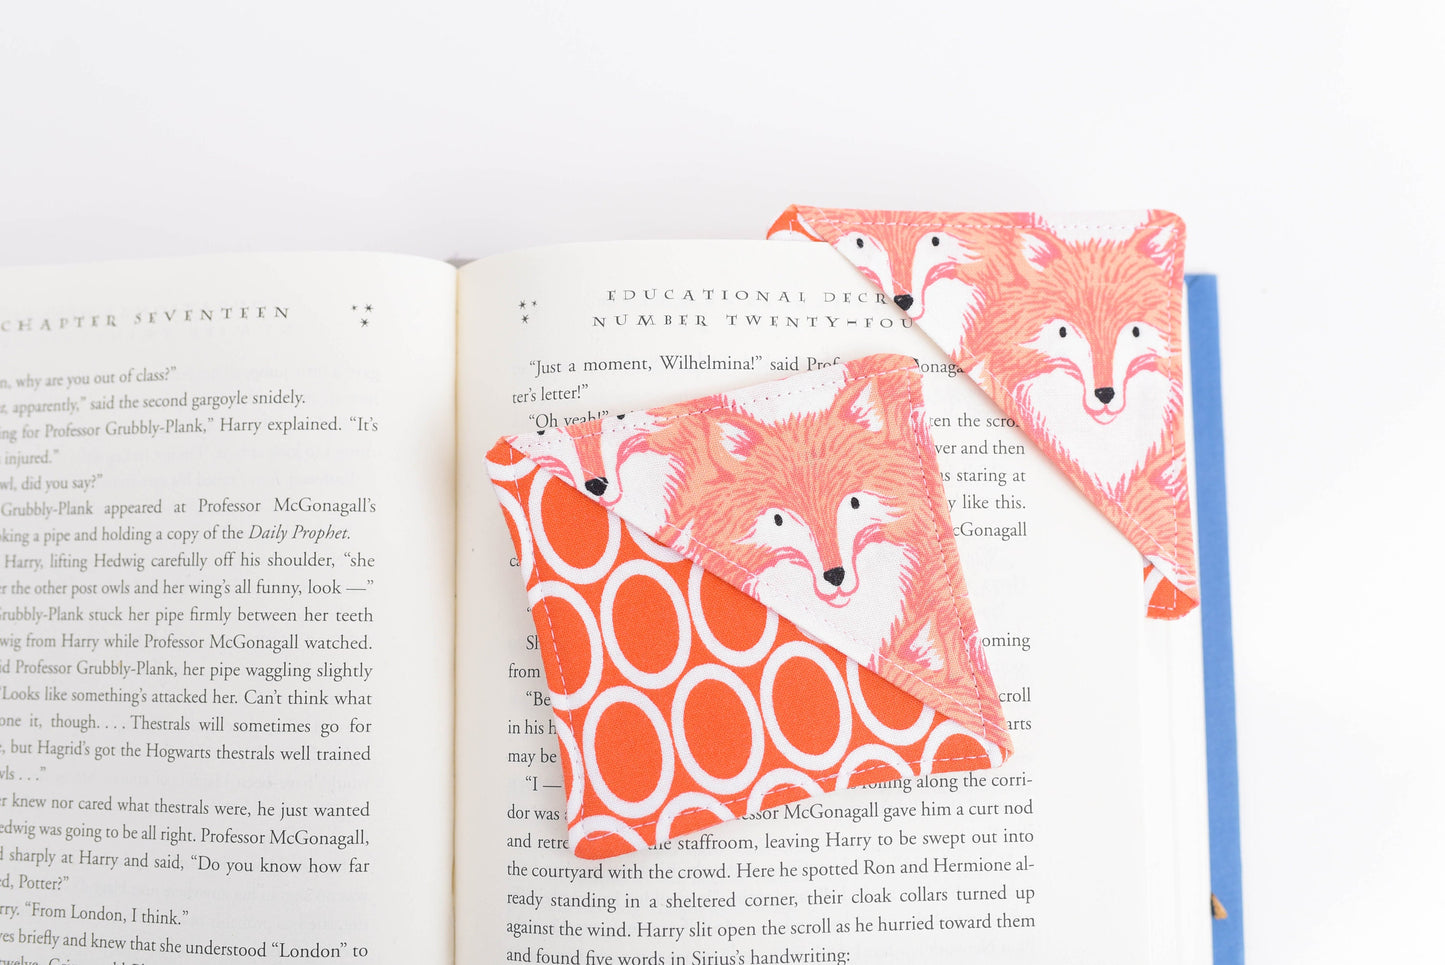 Fox & Orange Mod Dot Handmade Fabric Corner Bookmark